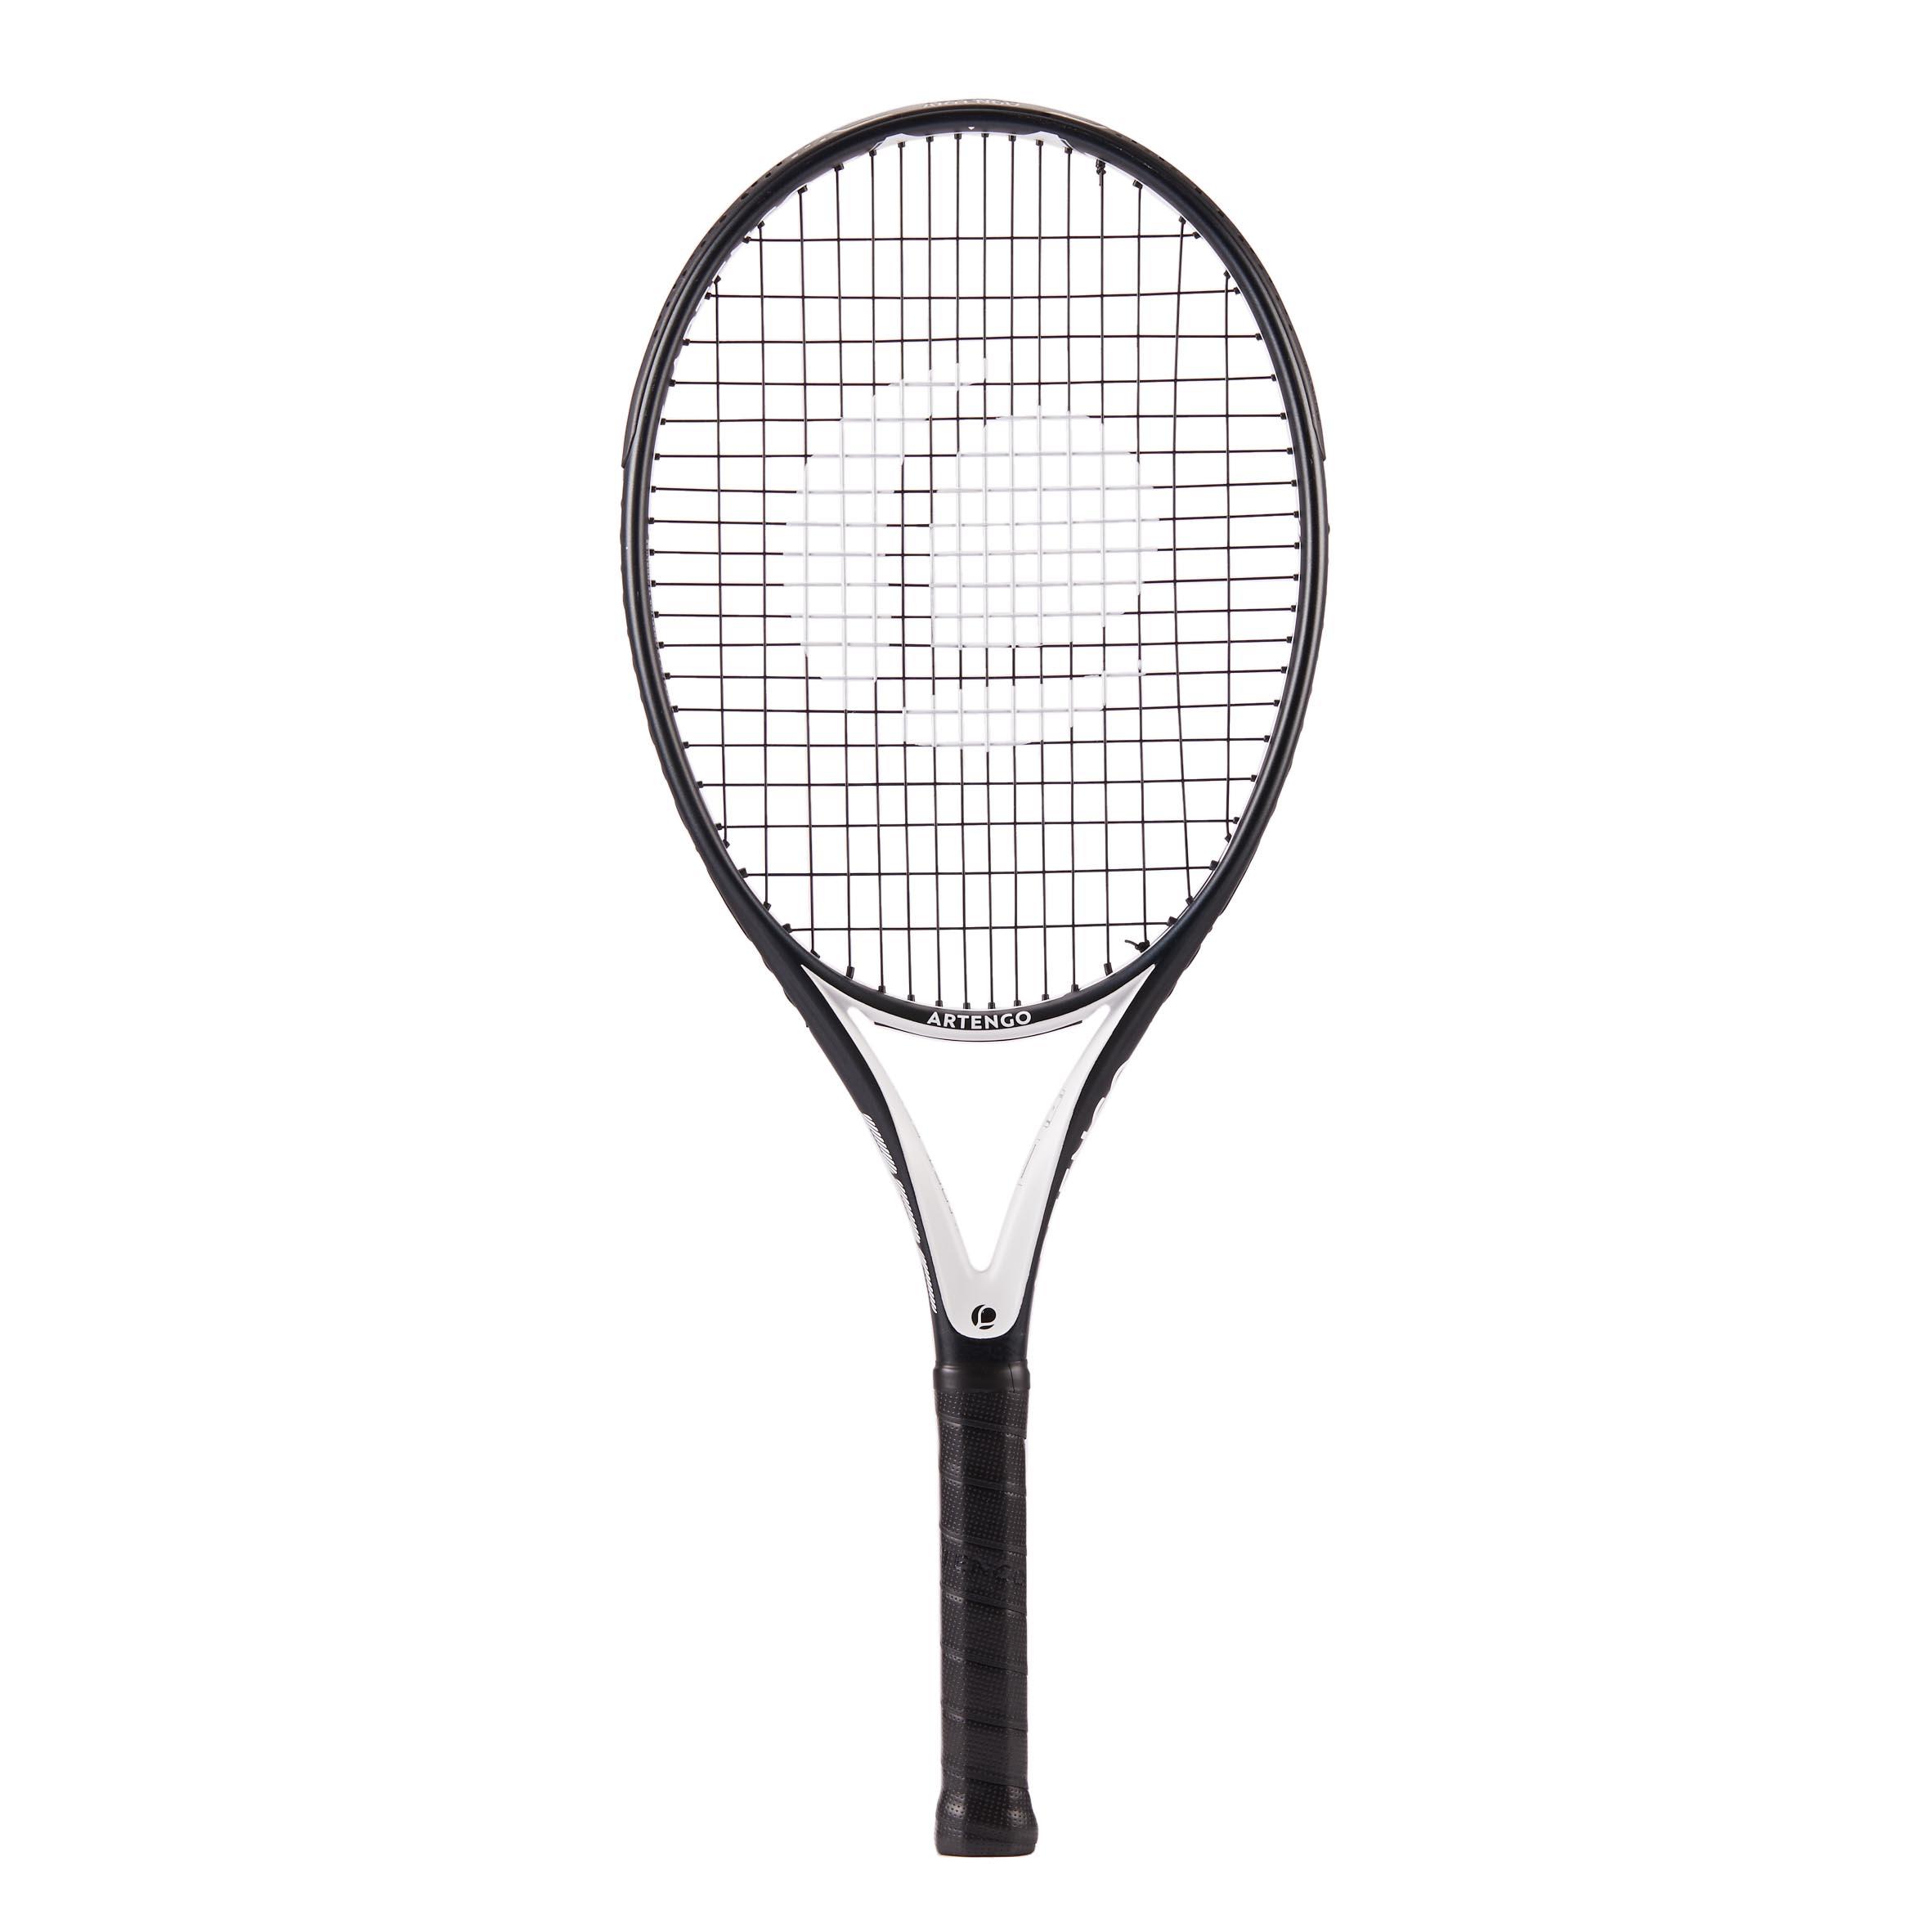 decathlon tennis racket